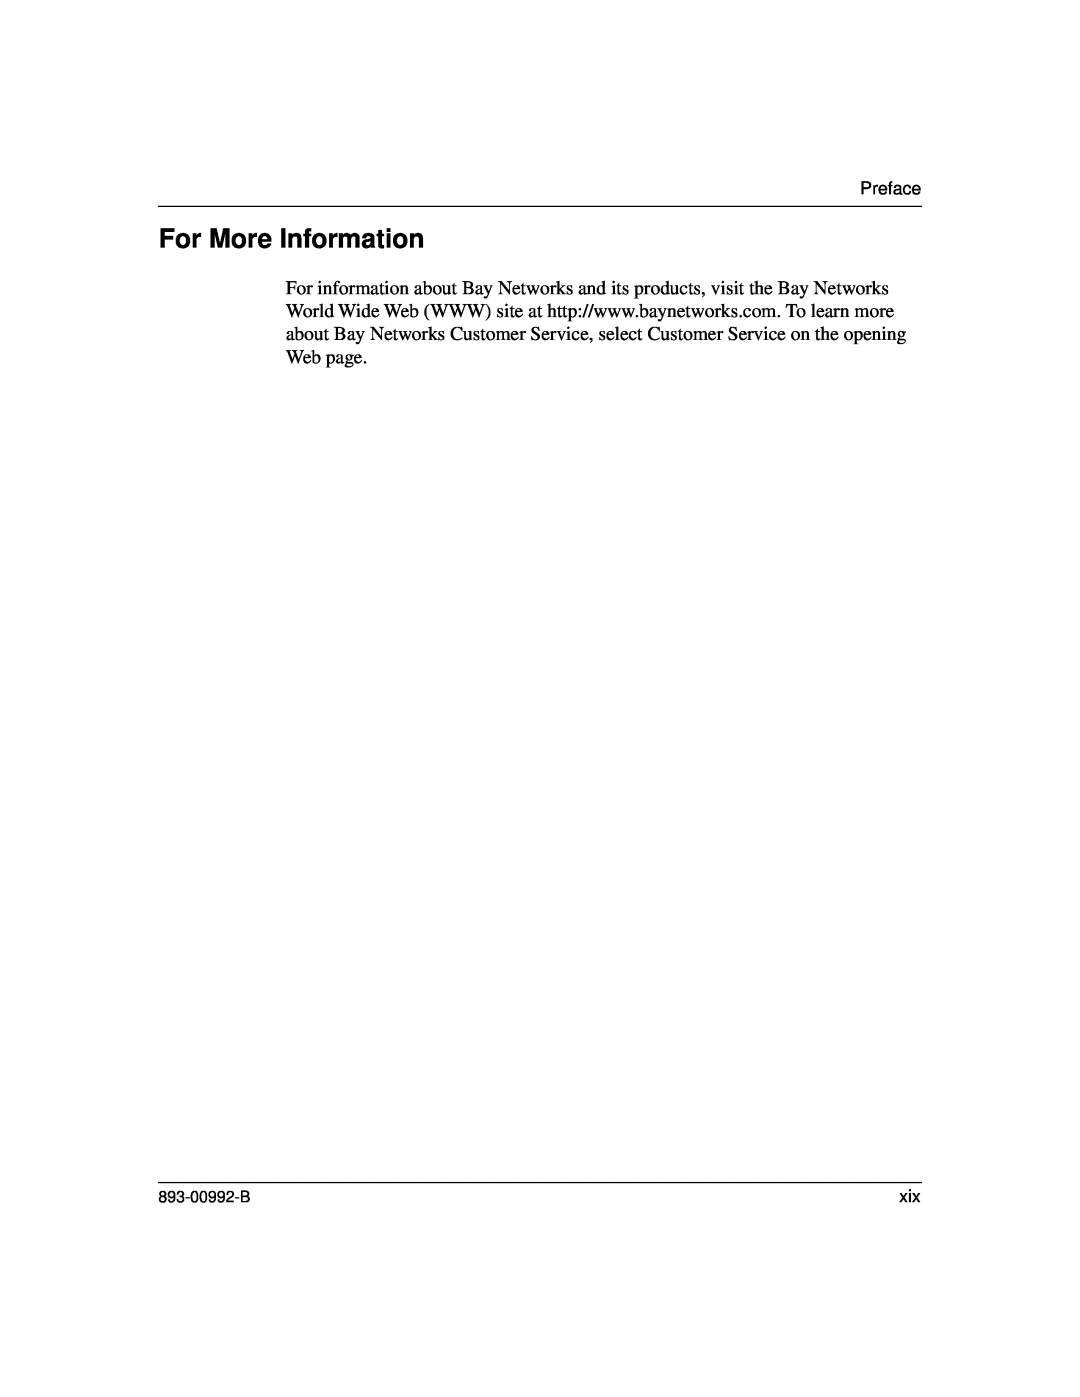 Bay Technical Associates 350 manual For More Information, Preface 